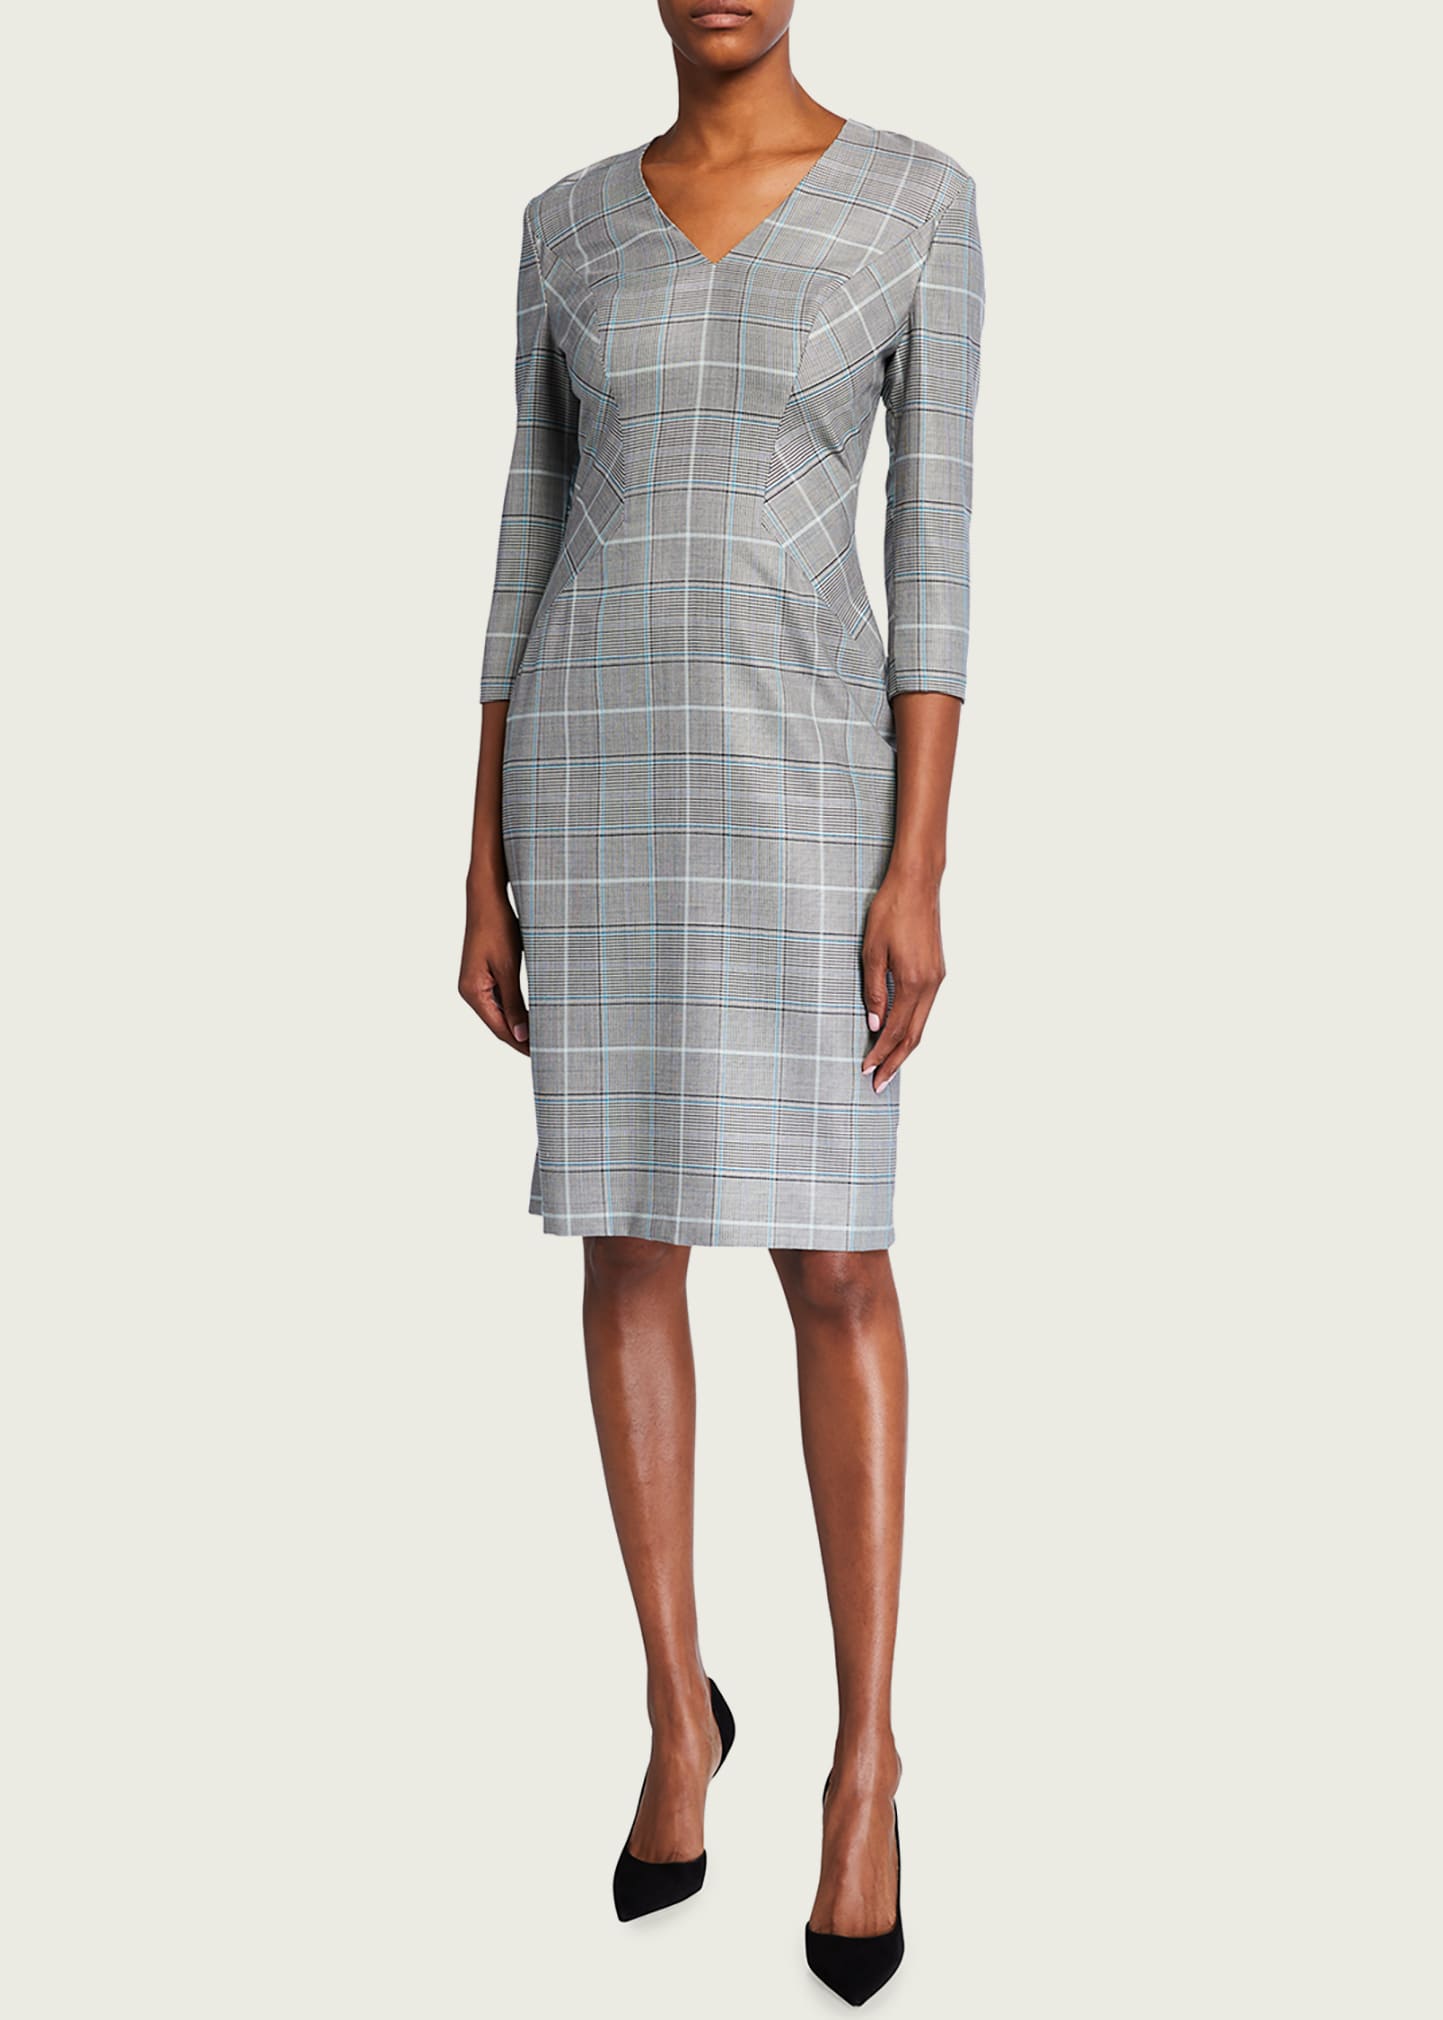 Escada Mixed-Check Wool-Silk 3/4-Sleeve Dress